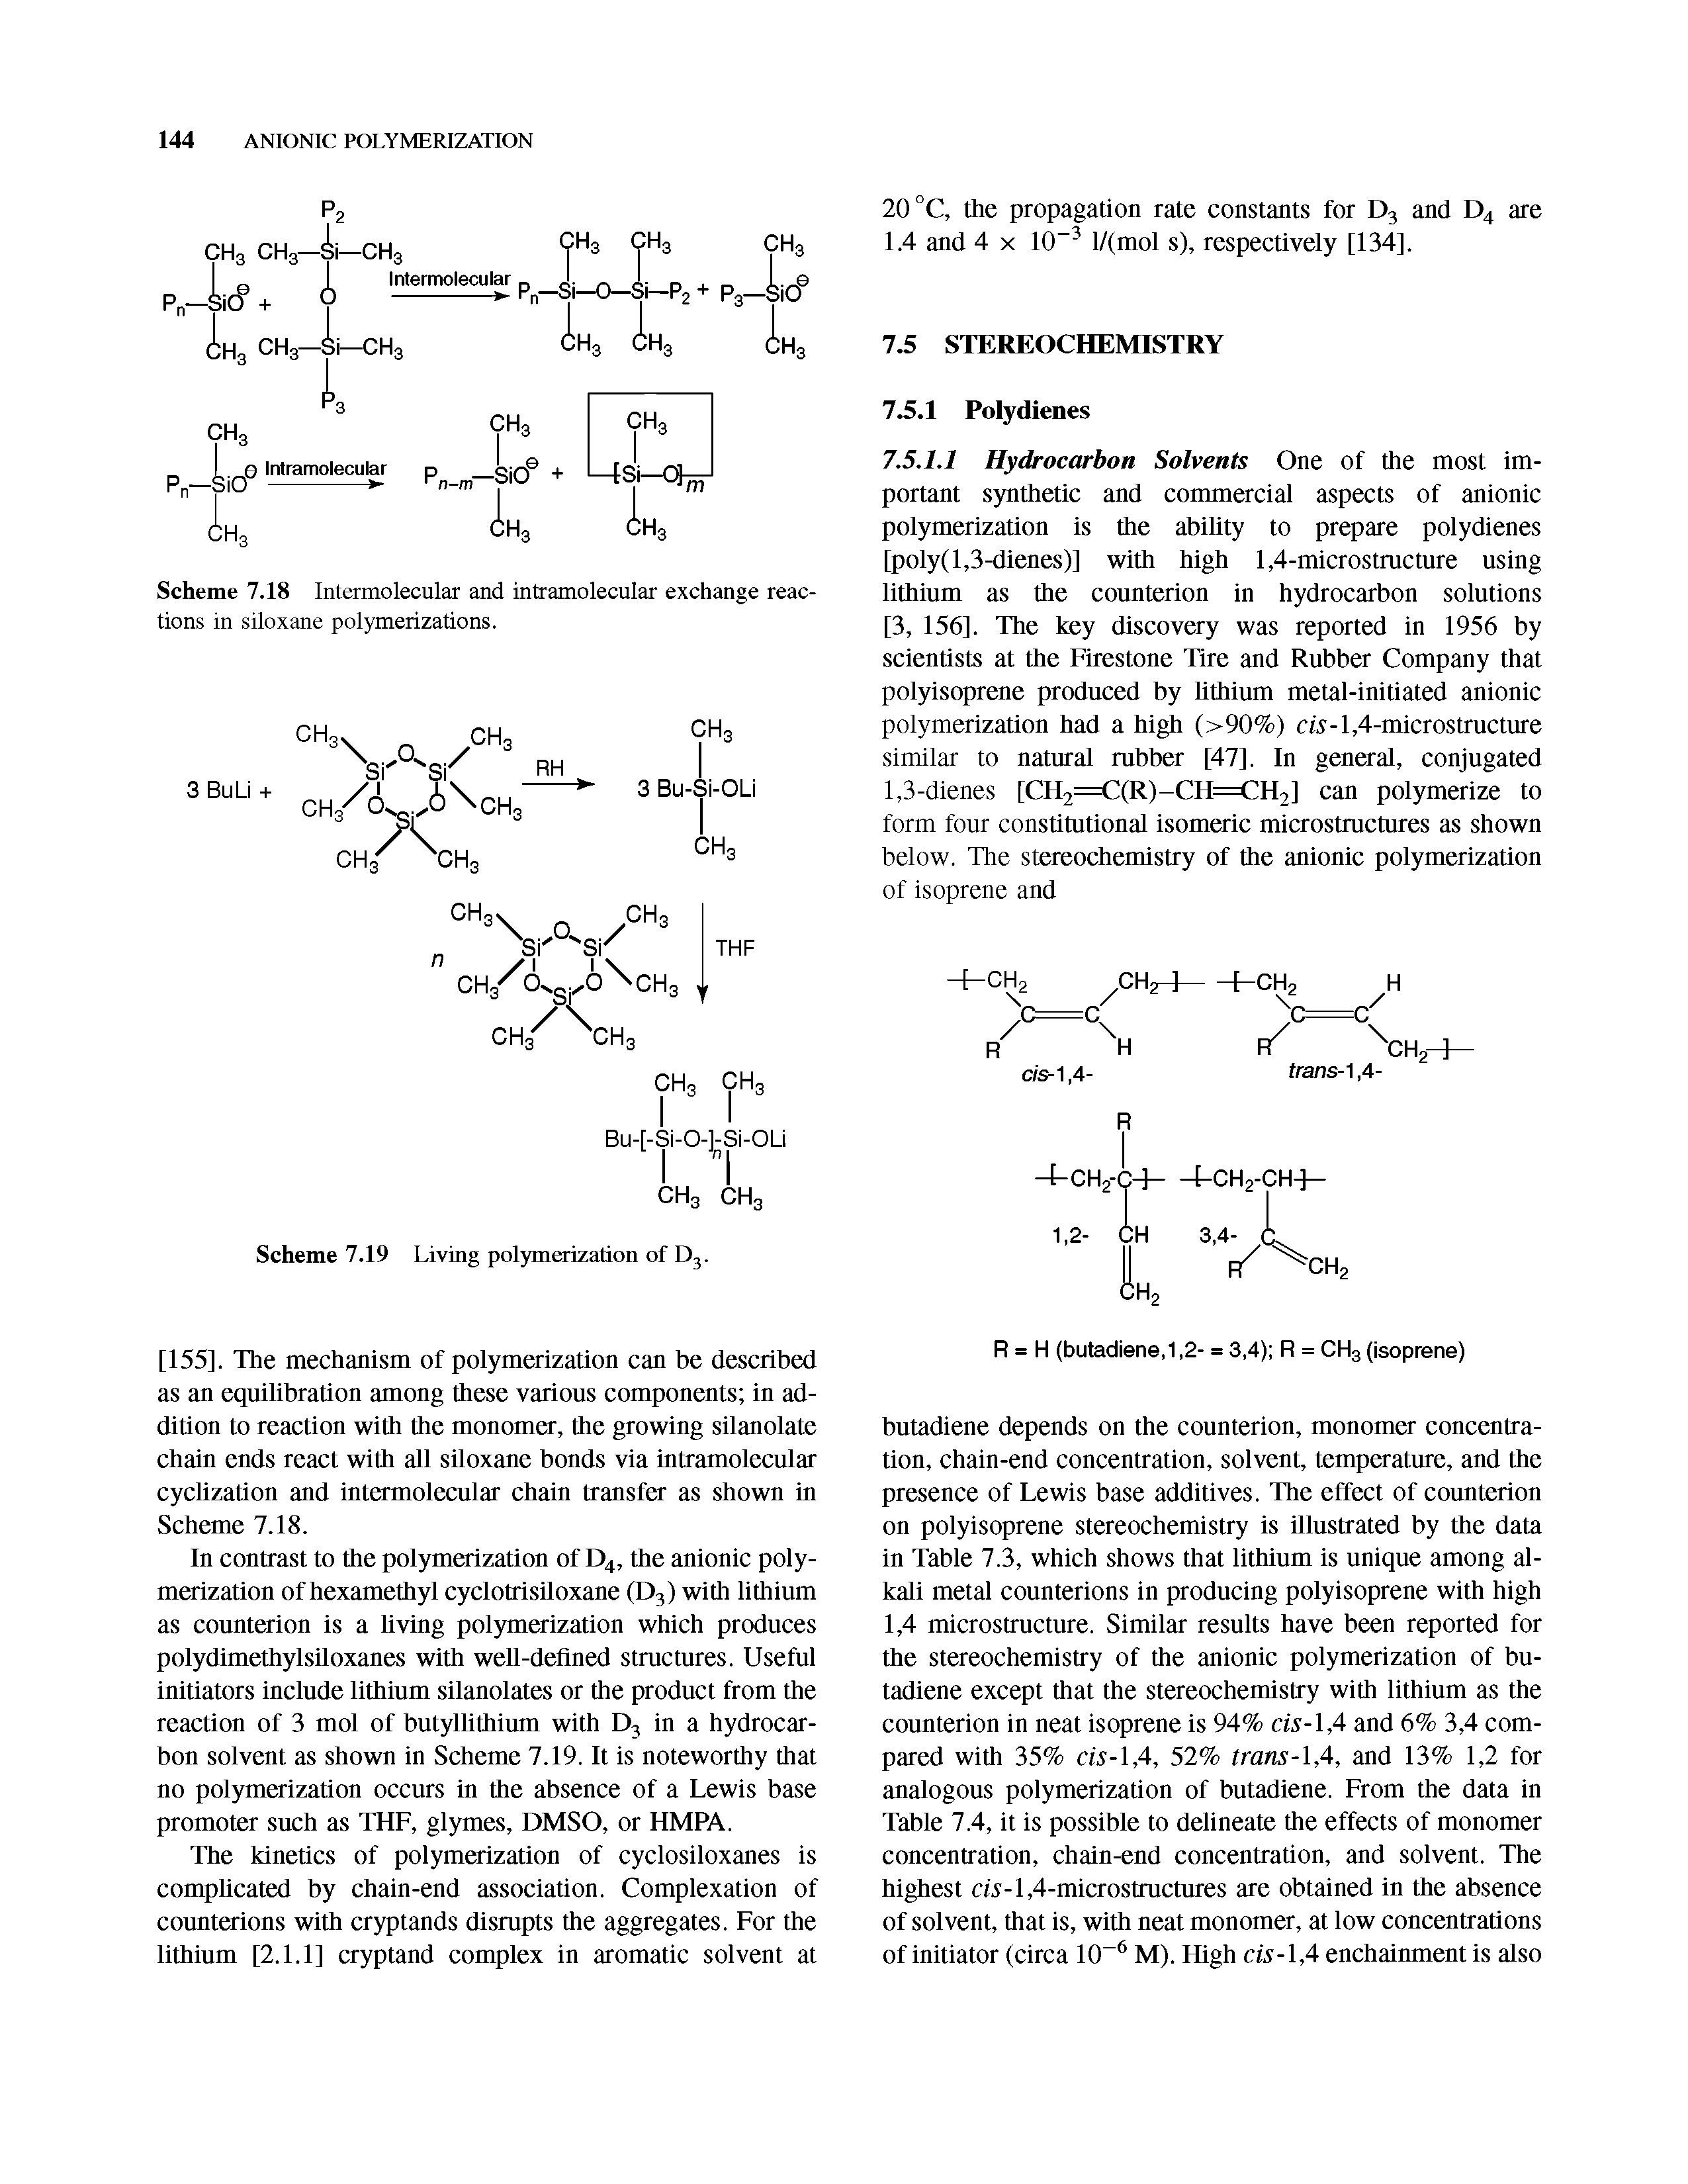 Scheme 7.18 Intermolecular and intramolecular exchange reactions in siloxane polymerizations.